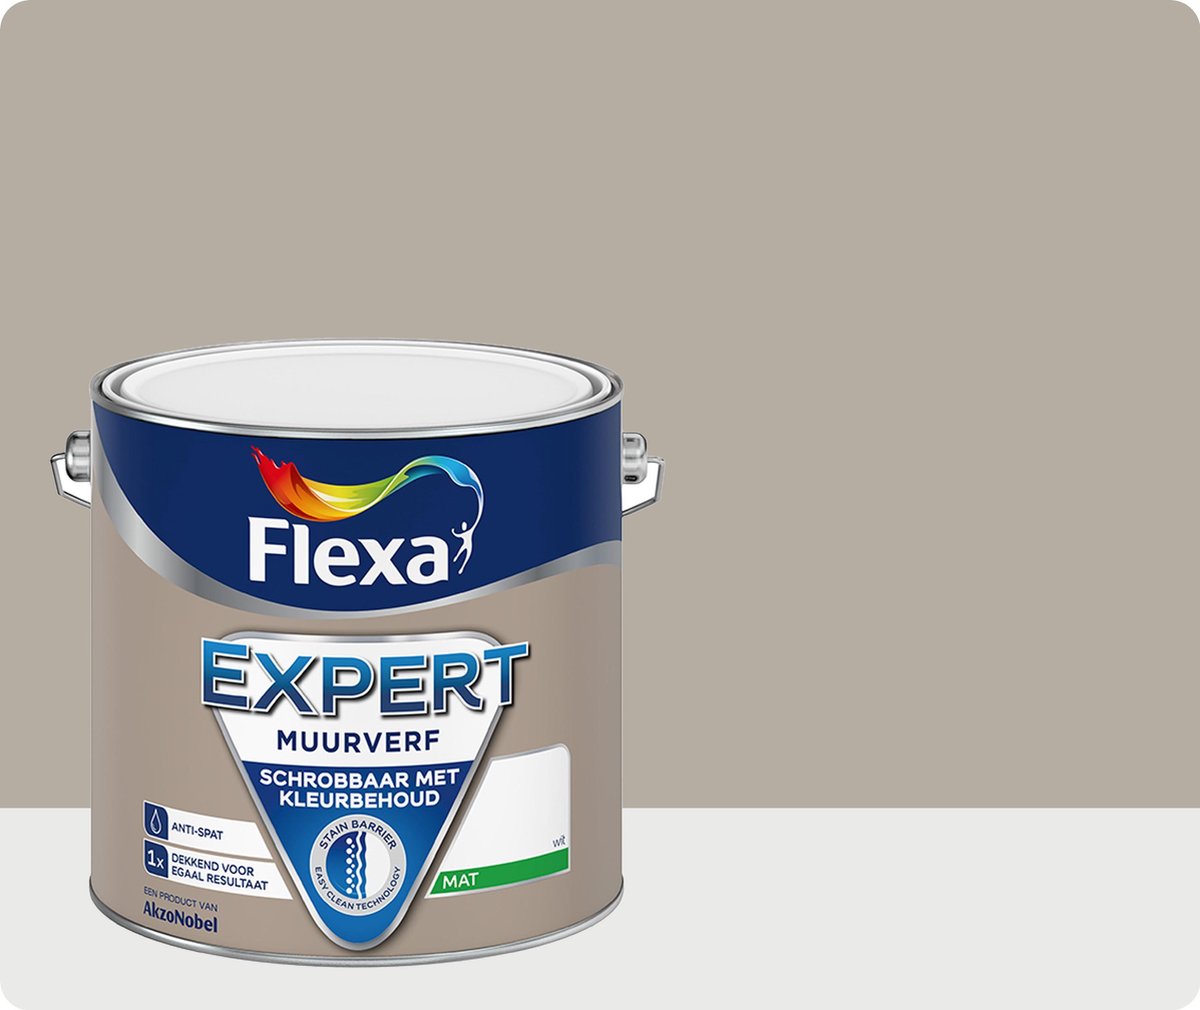 Flexa Expert Beigebruin 2.5 L bol.com